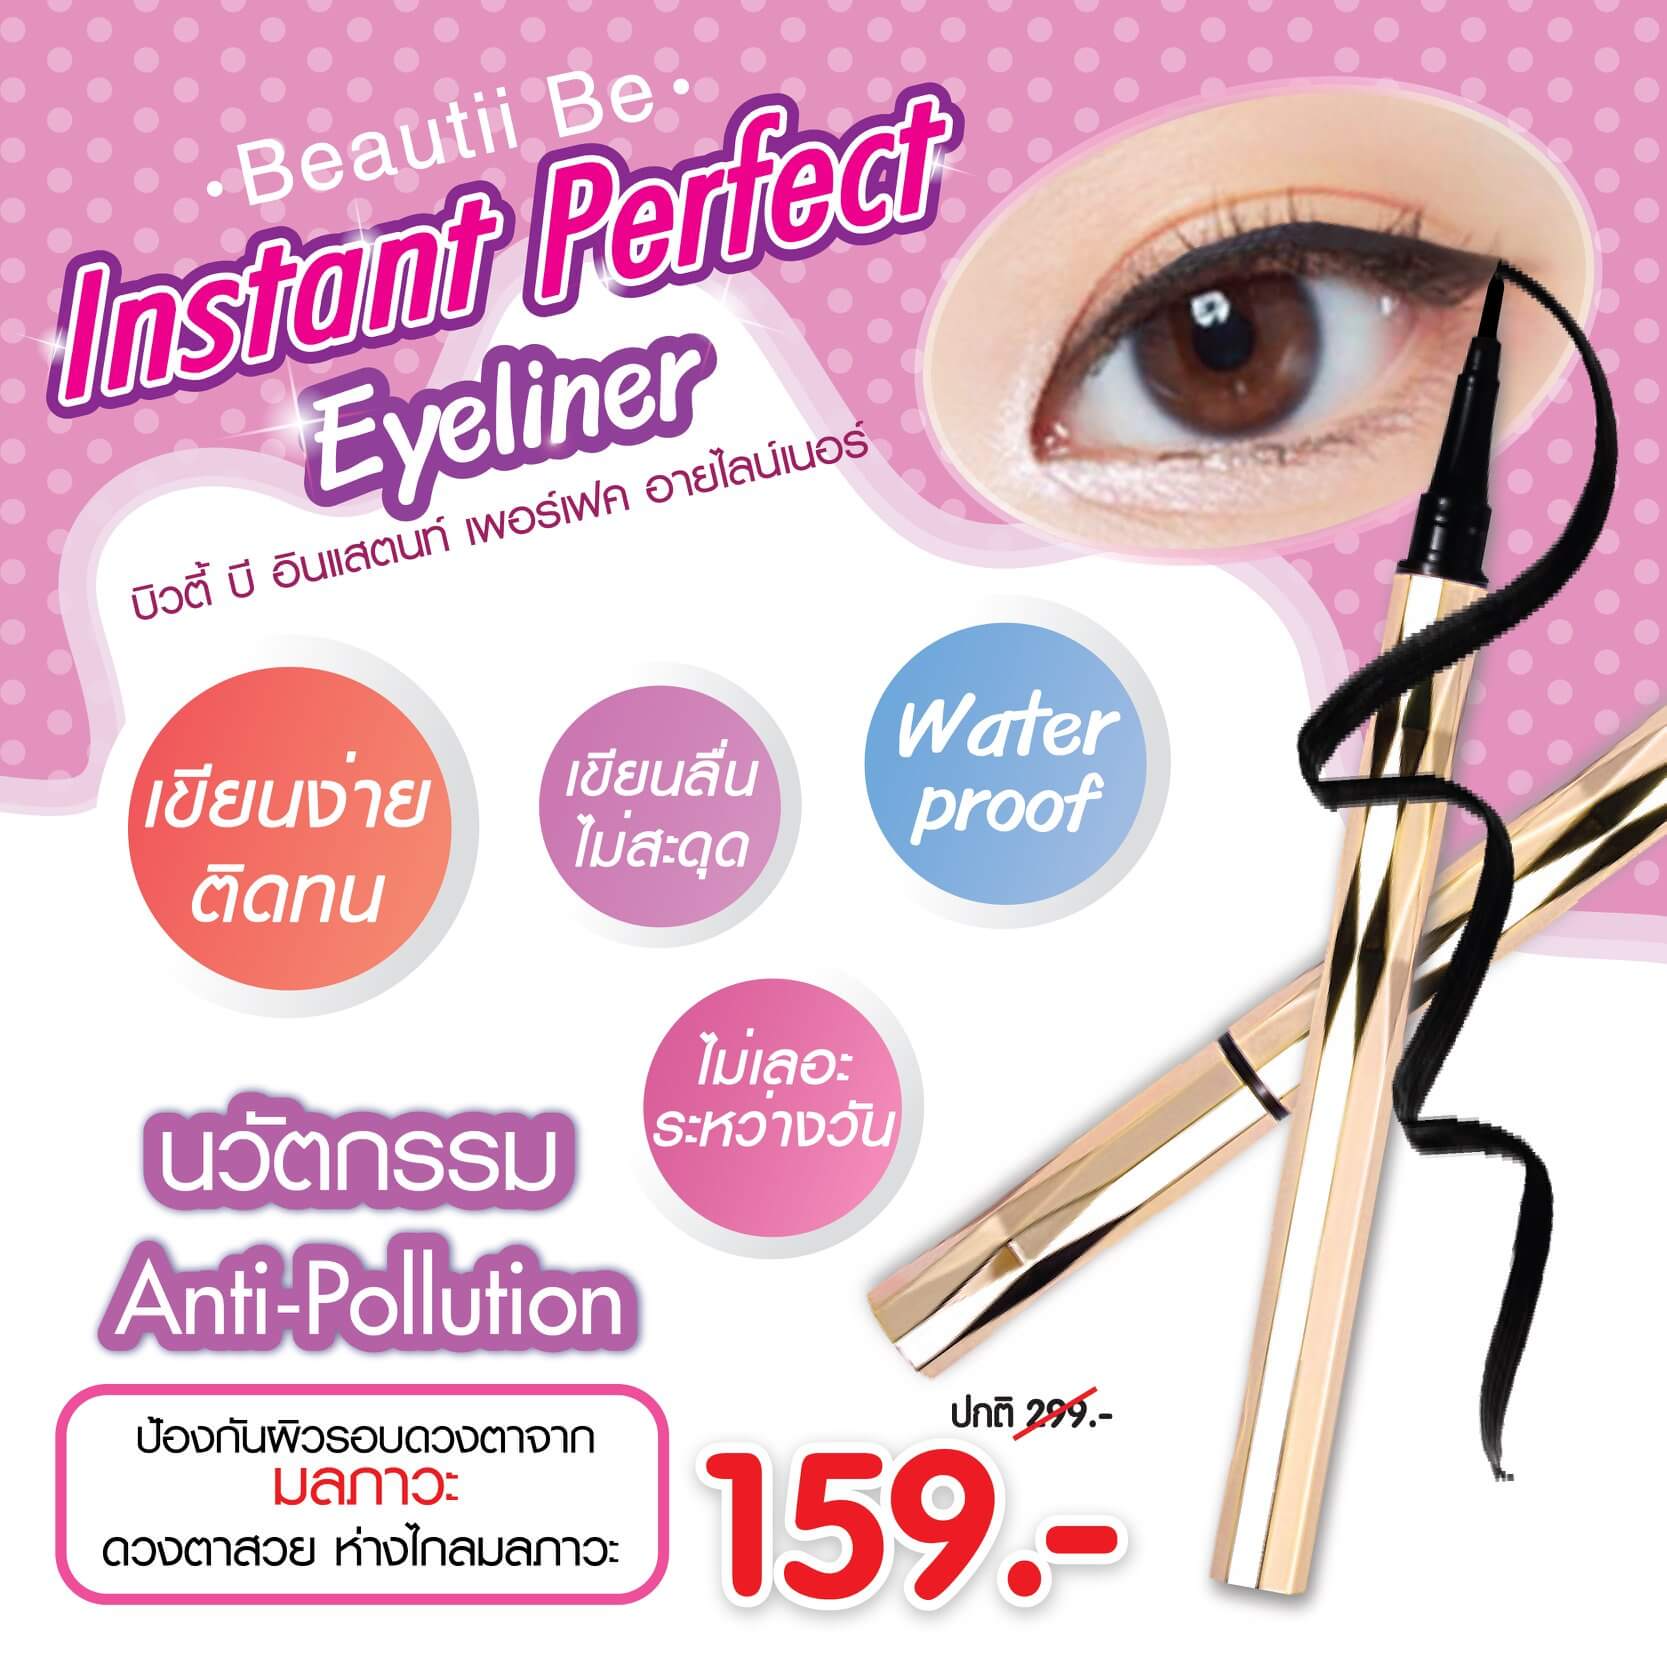 Beautii Be Instant Perfect Eyeliner 1.2 g.  ผลิตภัณฑ์ตกเเต่งดวงตา อายไลนเนอร์สีดำสนิท ด้วยเทคโนโลยี Anti-Pollution with Natural Bio Film ช่วยเคลือบผิวรอบดวงตา กันน้ำ กันเหงื่อ ไม่หลุดลอก ไม่เลอะ ไม่เป็นแพนด้าระหว่างวัน   พร้อมสารบำรุง Ac Tourmaline Extract ที่ช่วยดูซับความมัน ทำให้ติดทนนาน พร้อมฟื้นบำรุงผิวเปลือกตาและขนตาด้วย Hydrosal Salsilk Keratin ปกป้องอนุมูลอิสระ และคืนความนุ่ม ชุ่มชื้นให้แก่ผิว และขนตา